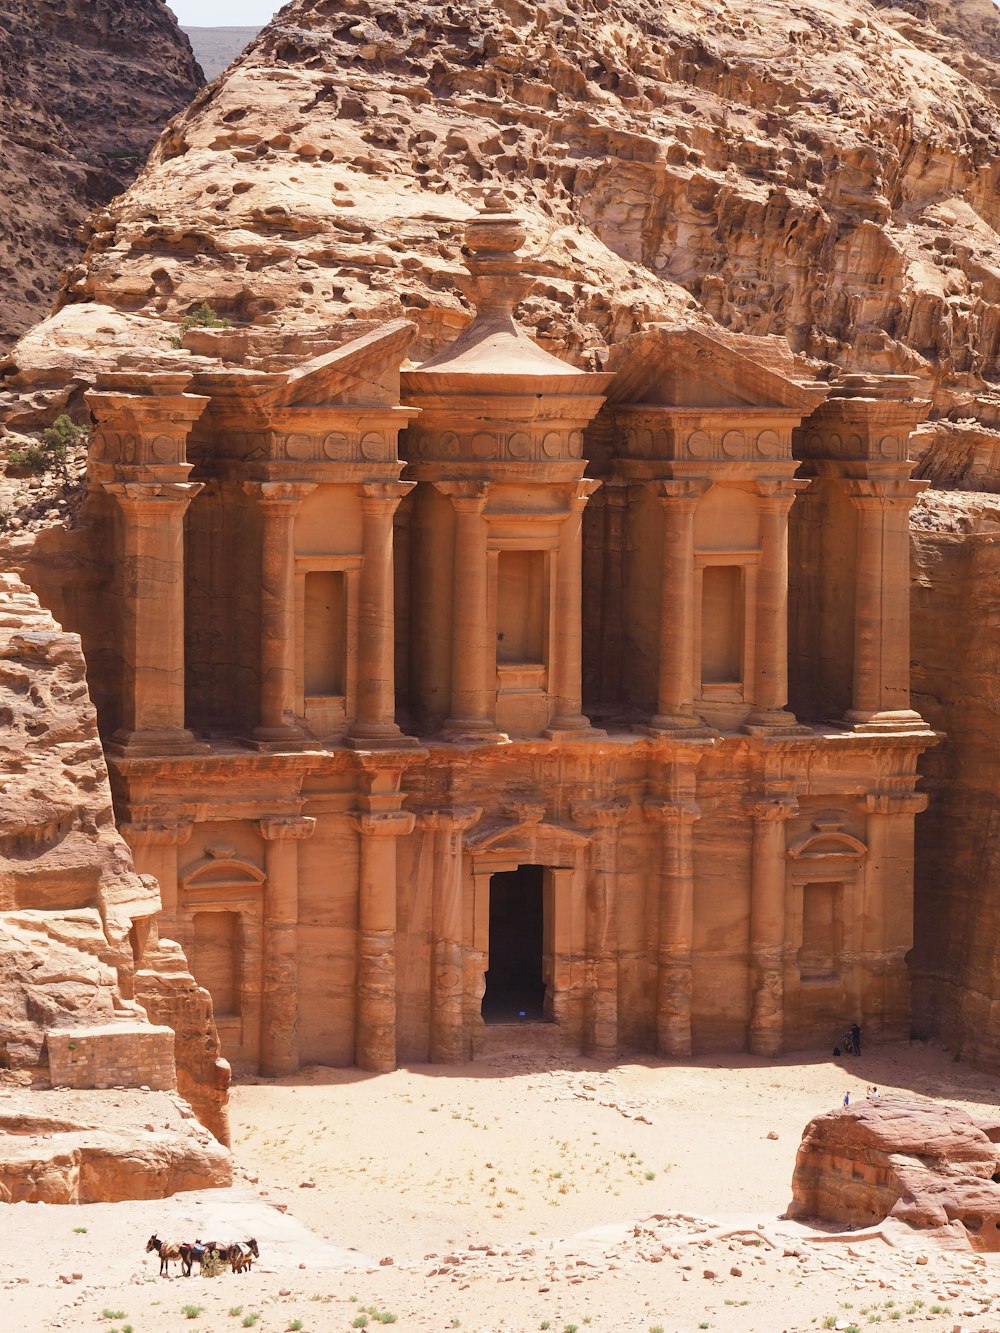 Petra in the desert